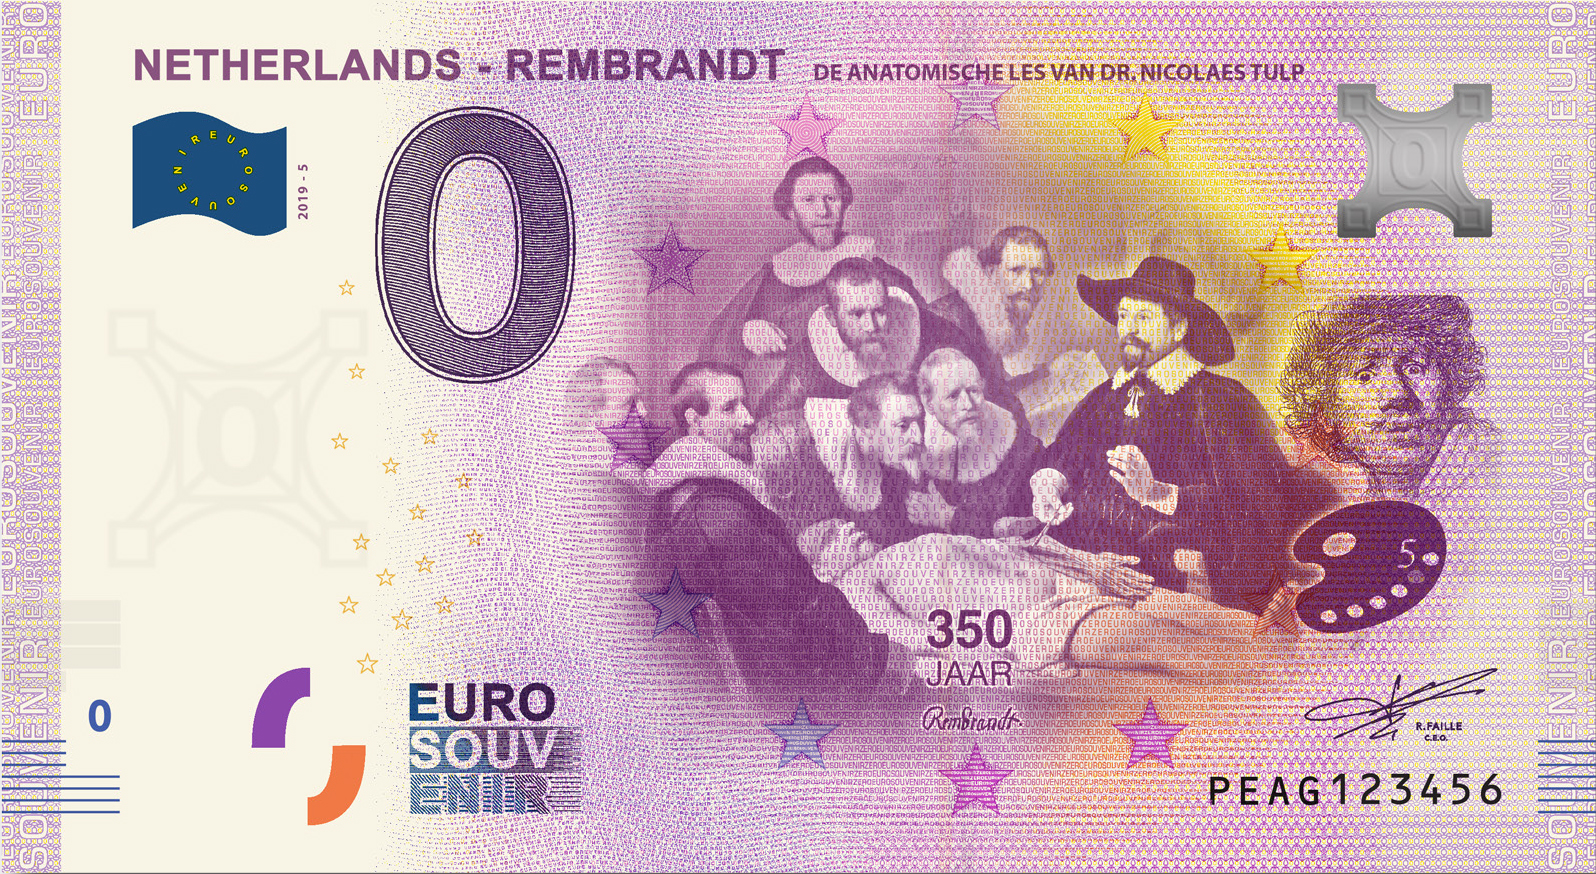 0 Euro biljet Nederland 2019 - Rembrandt De Anatomische les van Dr. Nicolaes Tulp